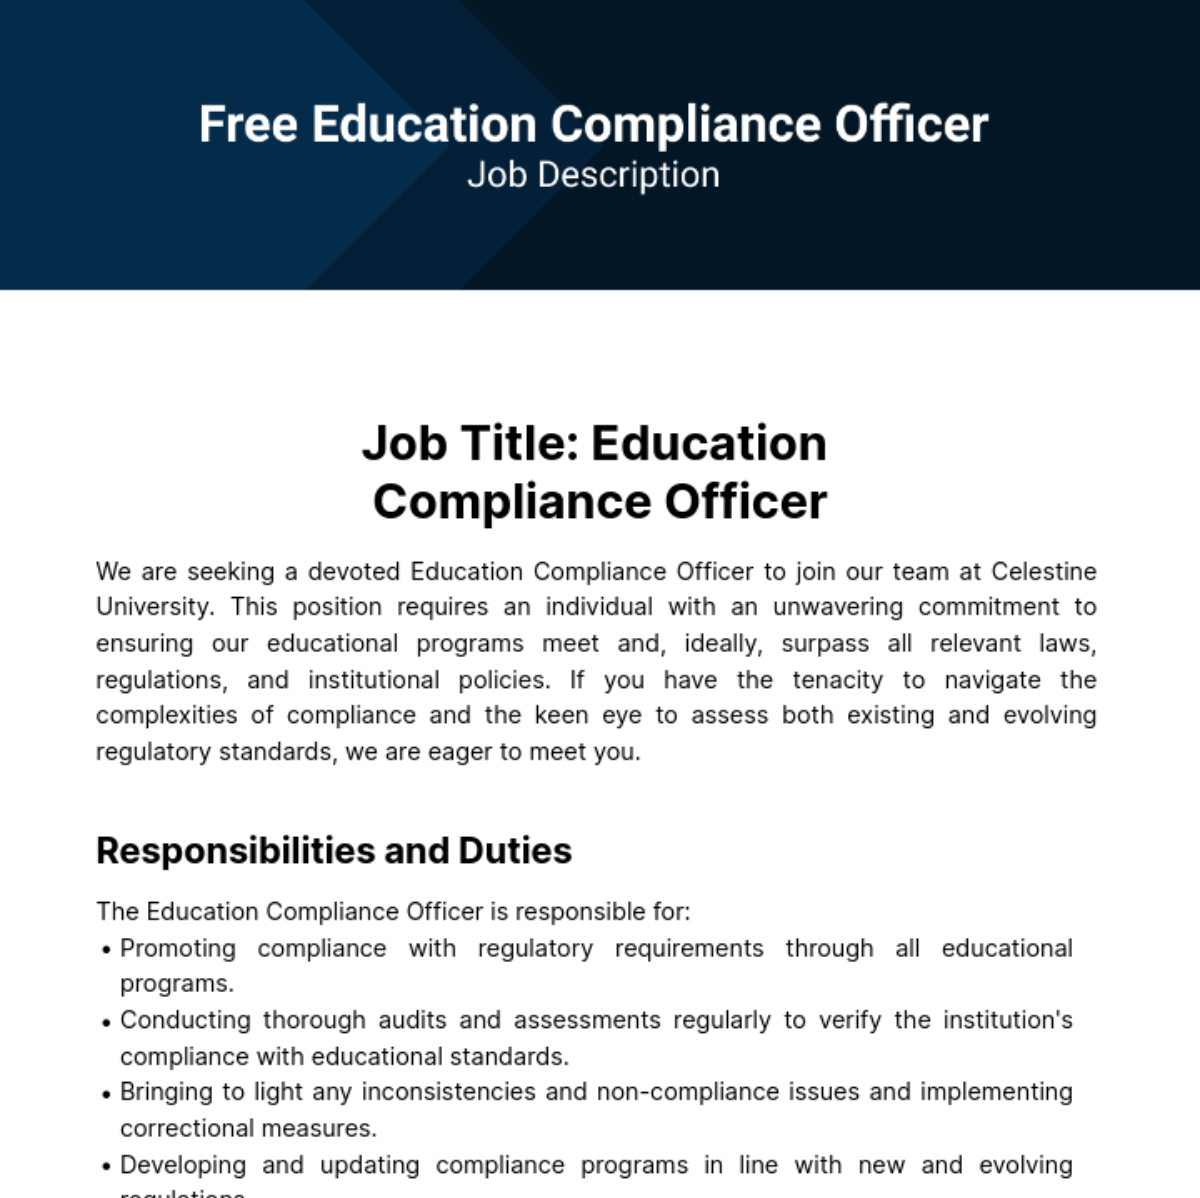 Free Education Compliance Officer Job Description Template